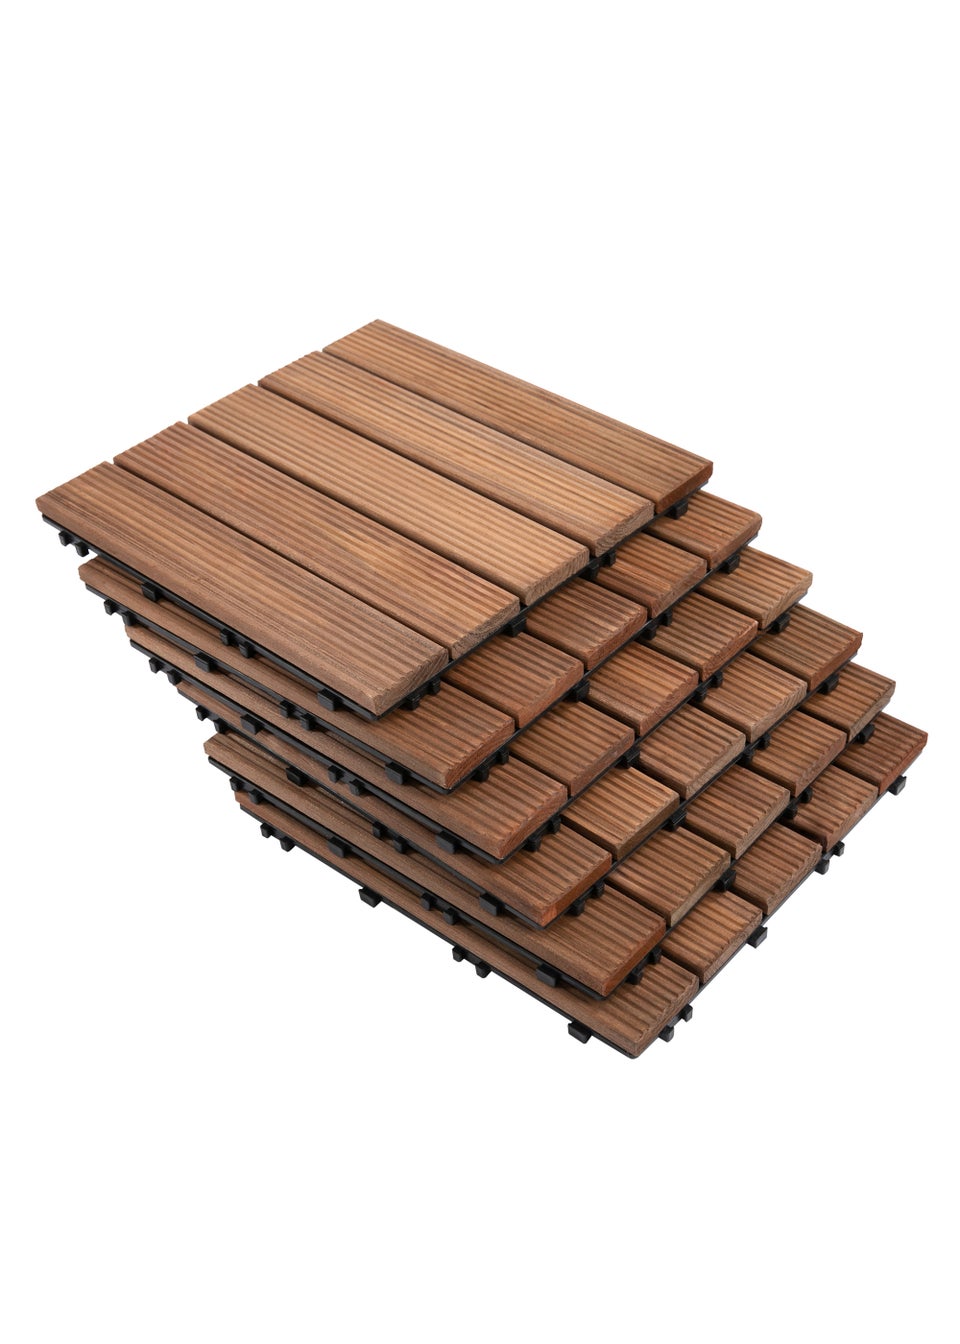 Outsunny 27 Piece Wood Interlock Floor Tiles (30cm x 30cm x 2.5cm)